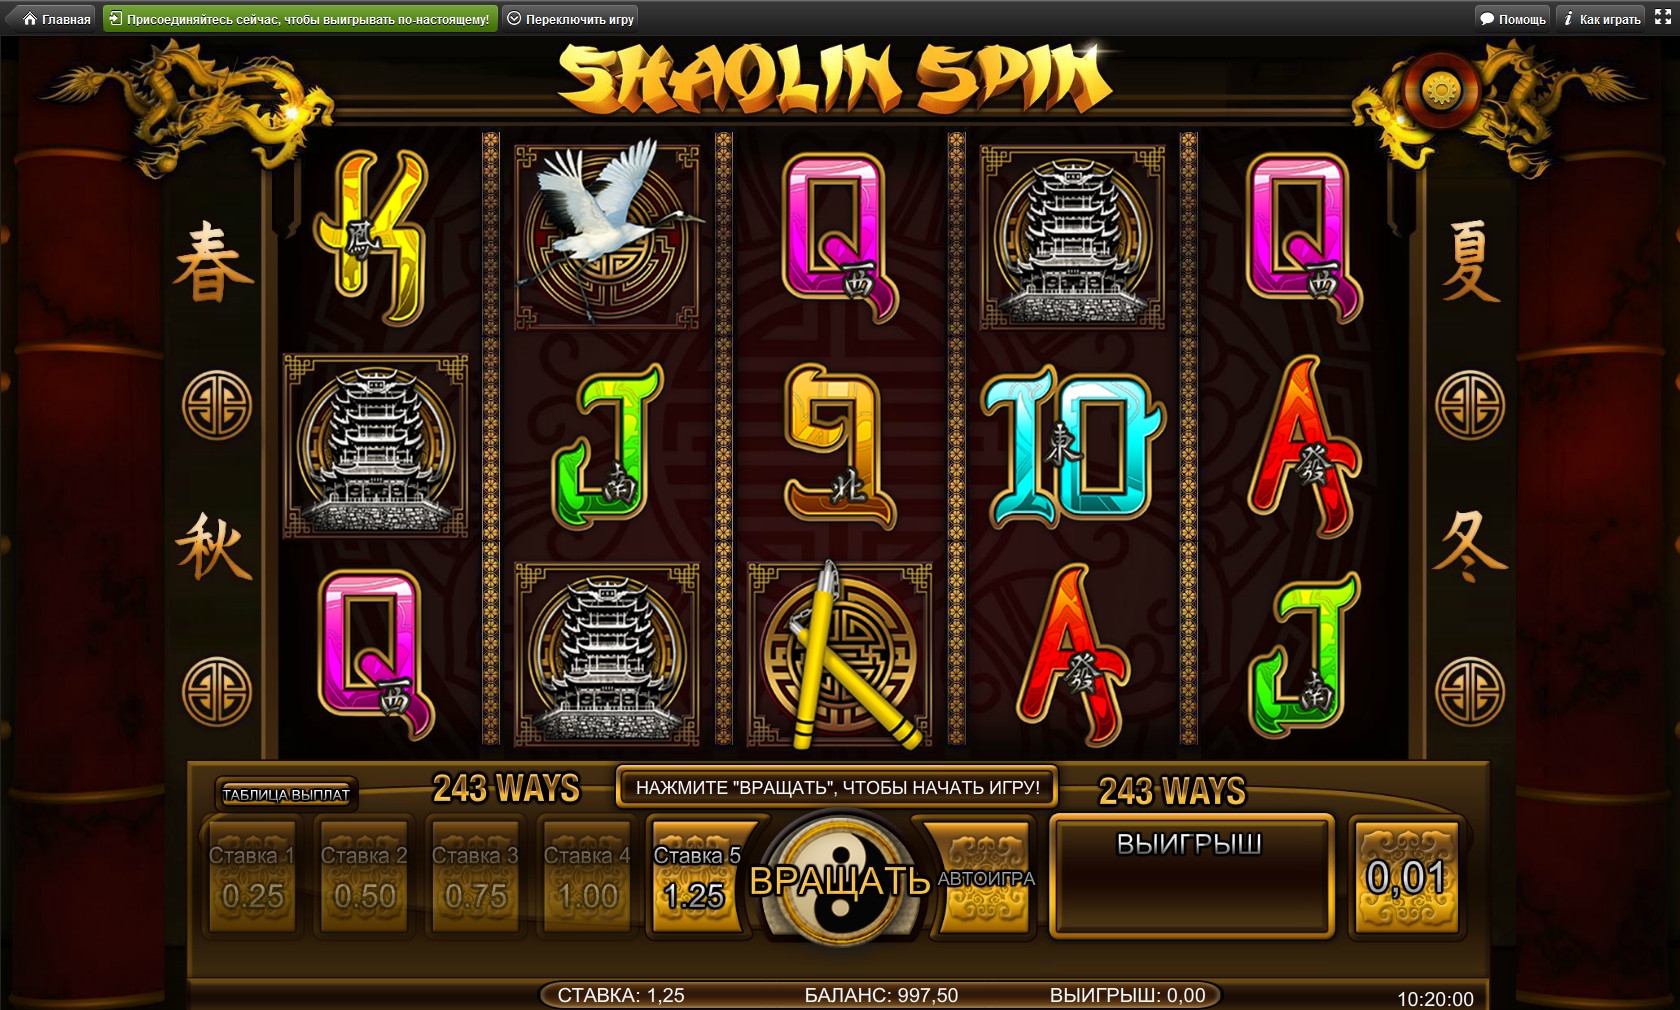 Shaolin Spins (Shaolin Spins) from category Slots